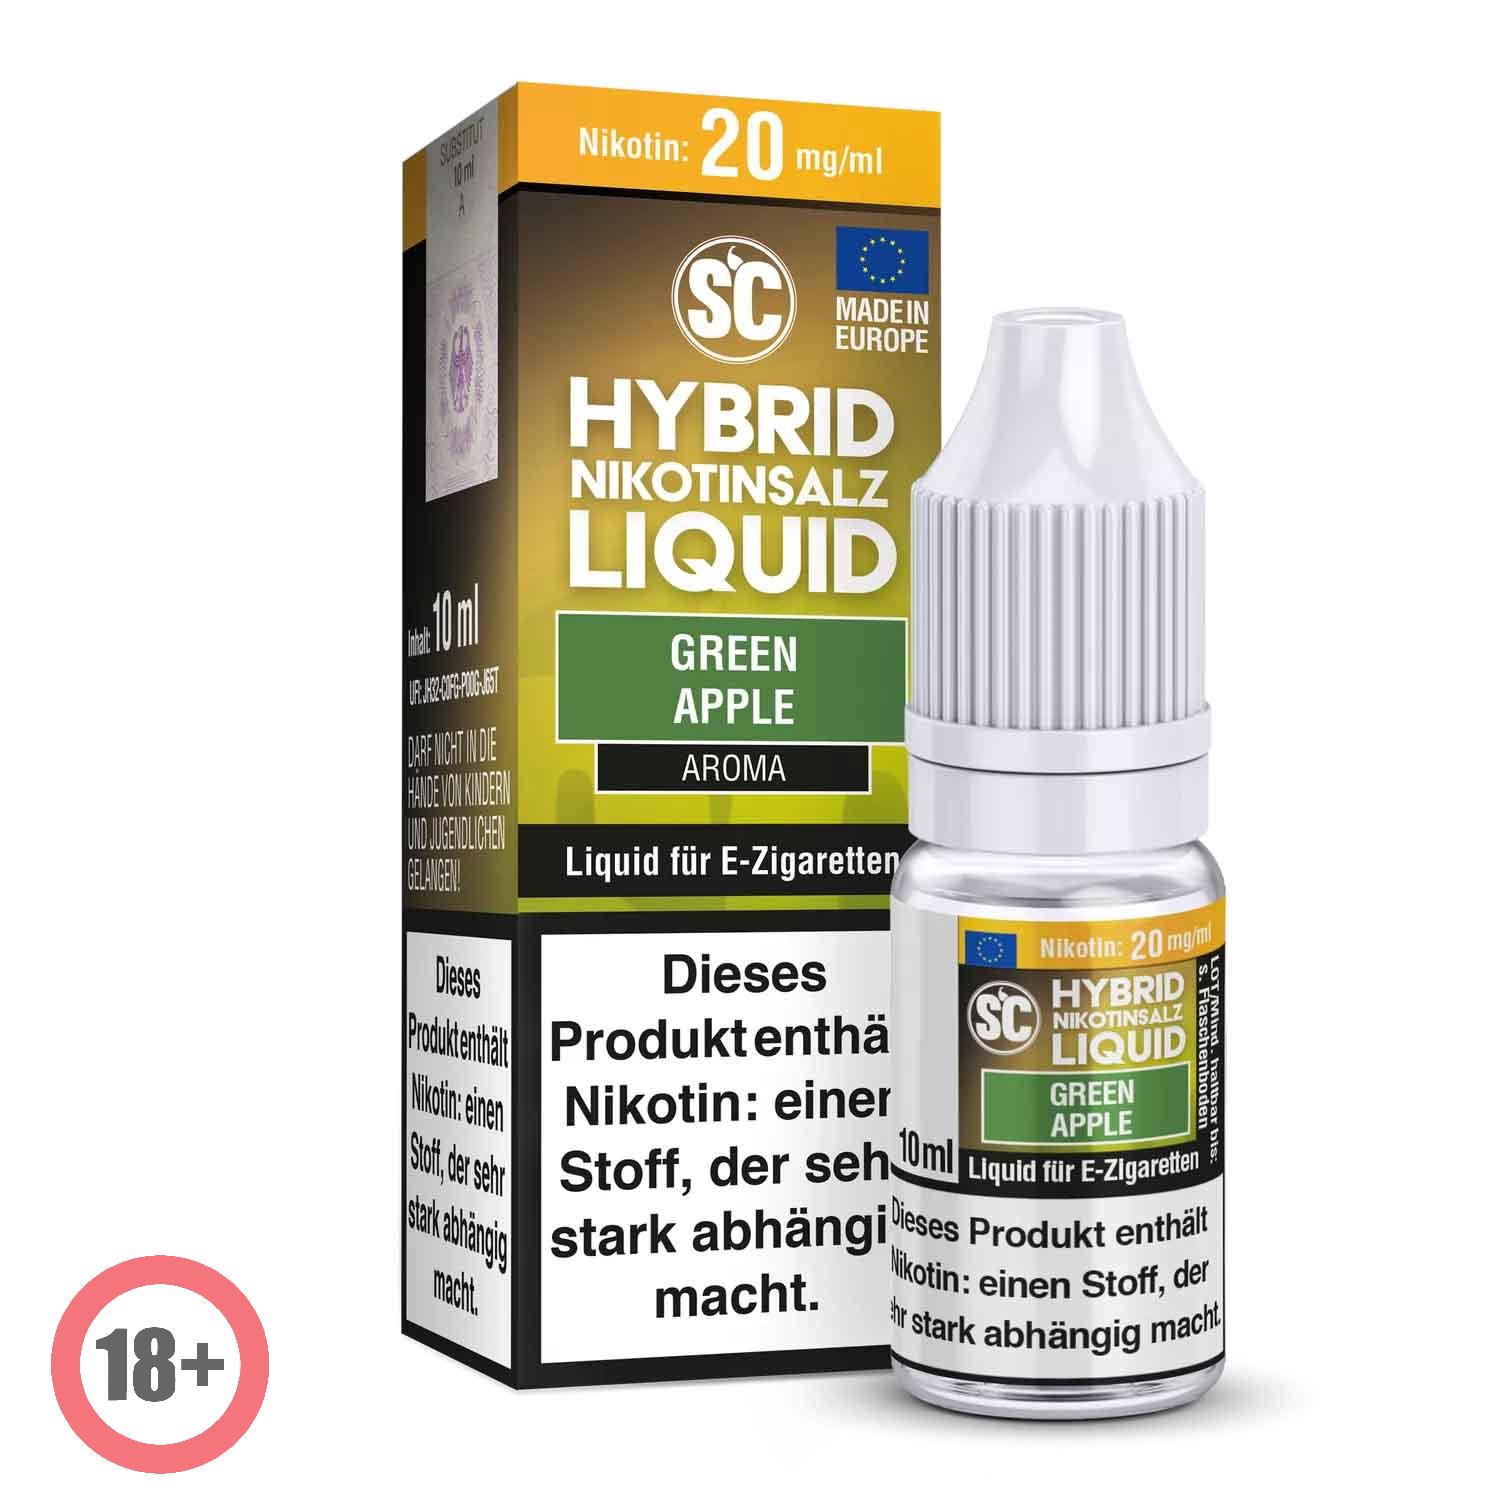 SC - Green Apple Hybrid Nikotinsalz Liquid ✅ Günstig kaufen! 